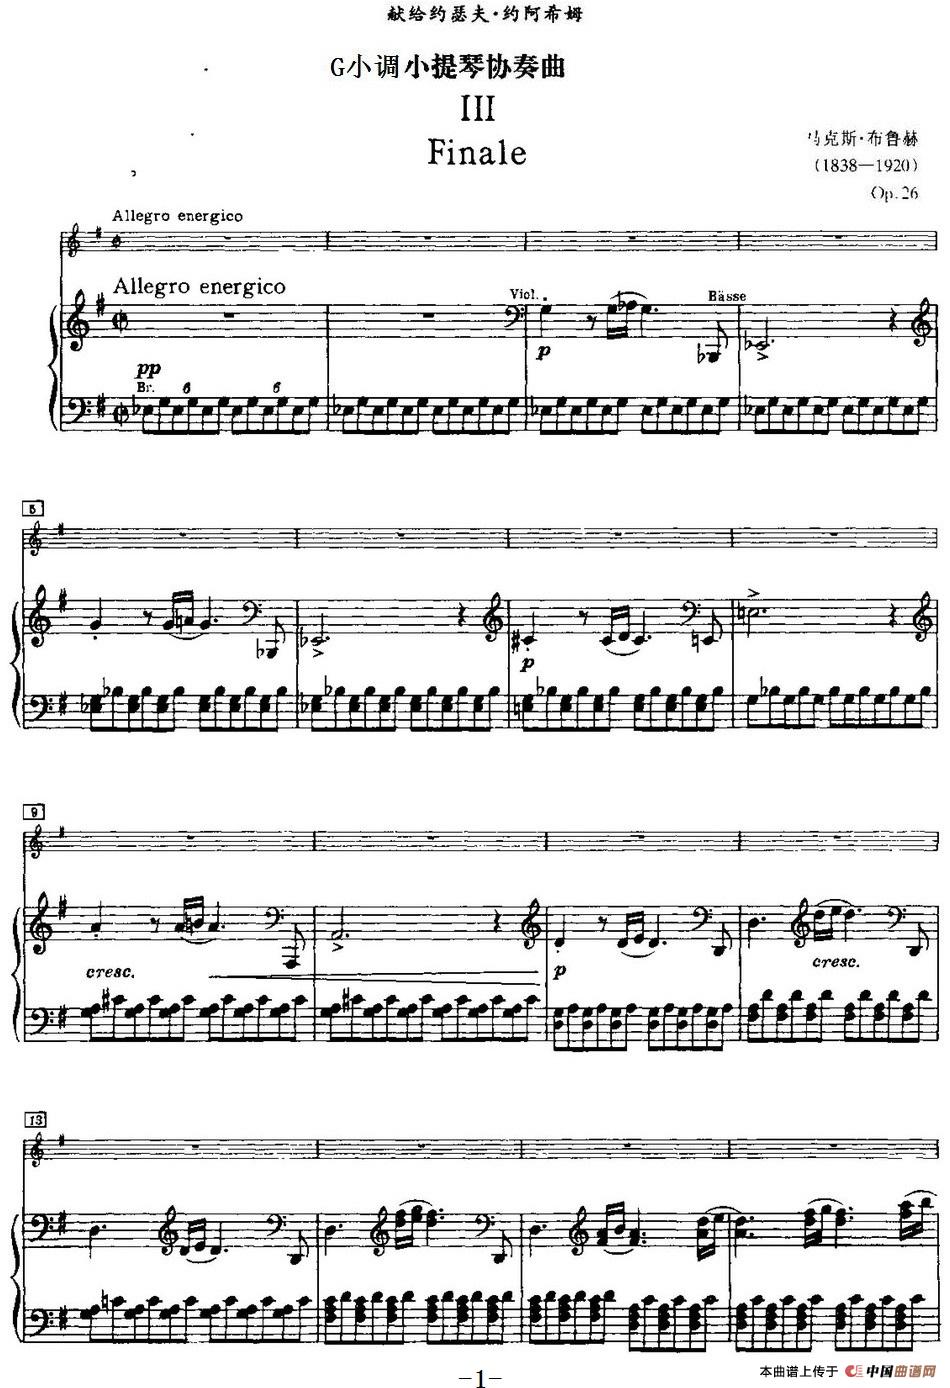 g小调小提琴协奏曲Op.26（III、Finale、小提琴+钢琴